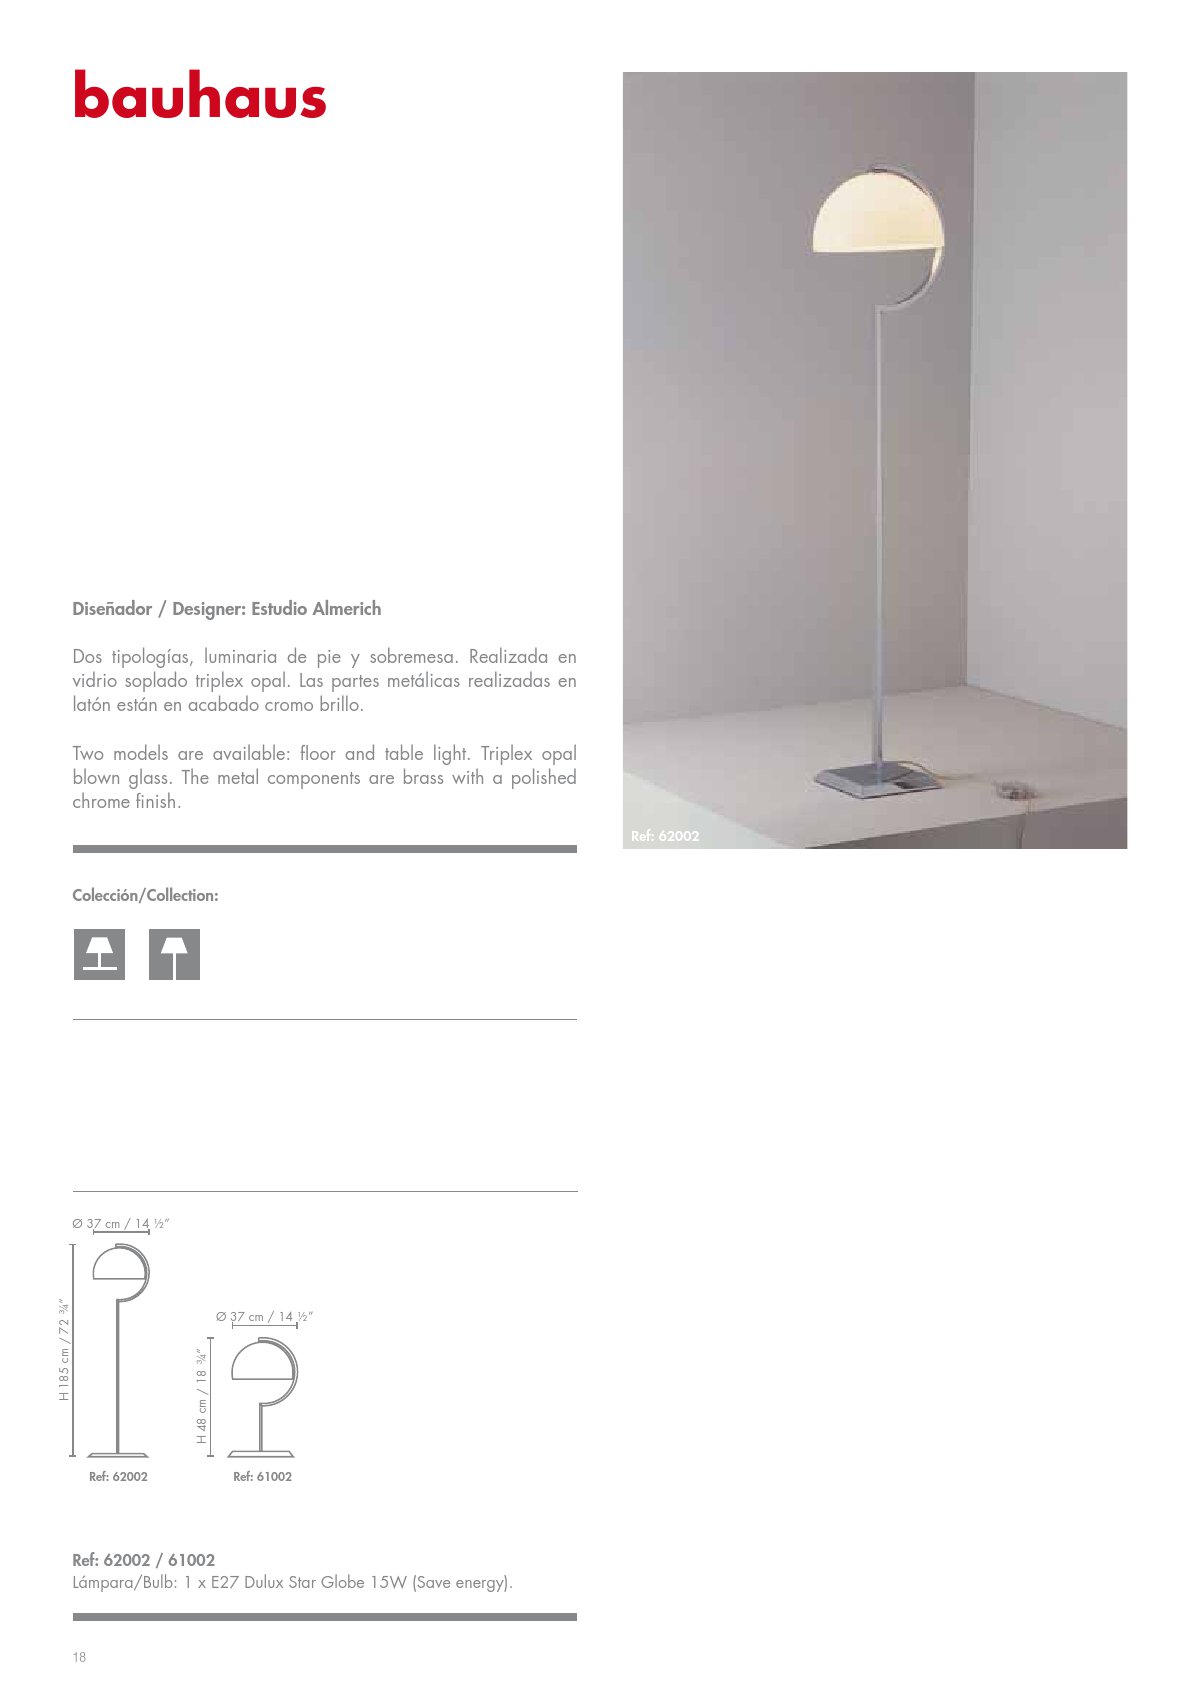 Almerich Bauhaus lámpara 1xE27 15w 62002